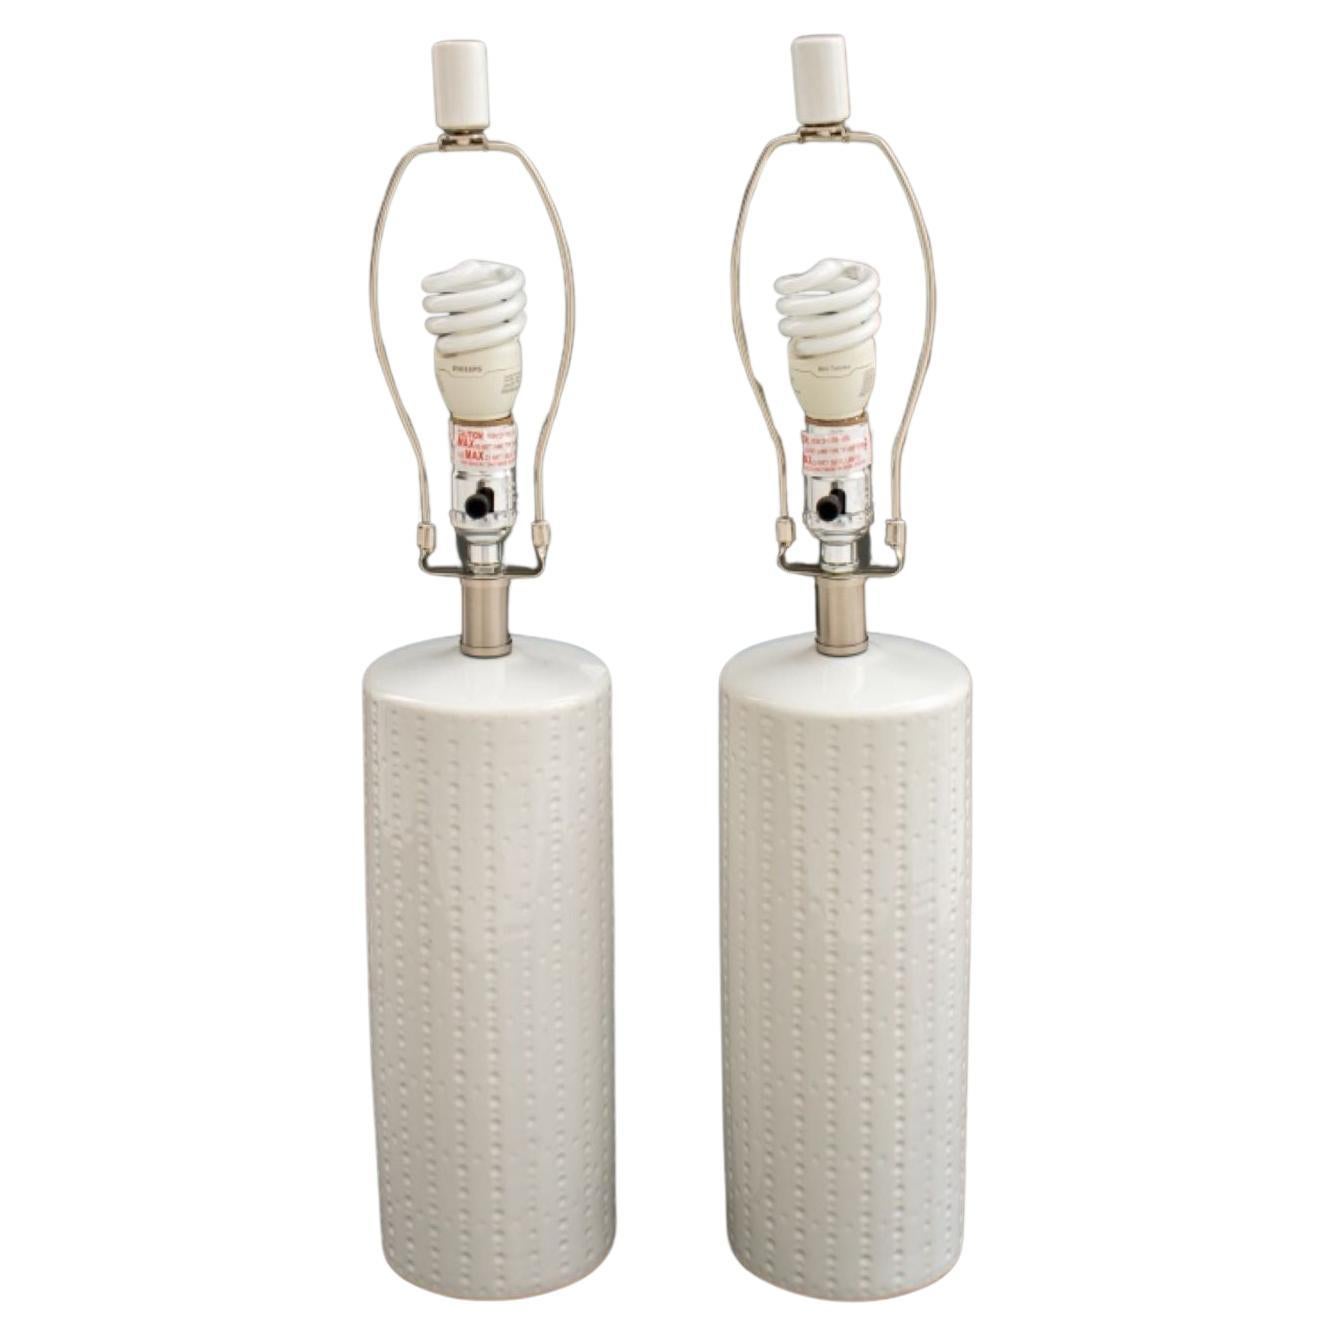 Mod 1970s Style White Ceramic Lamps